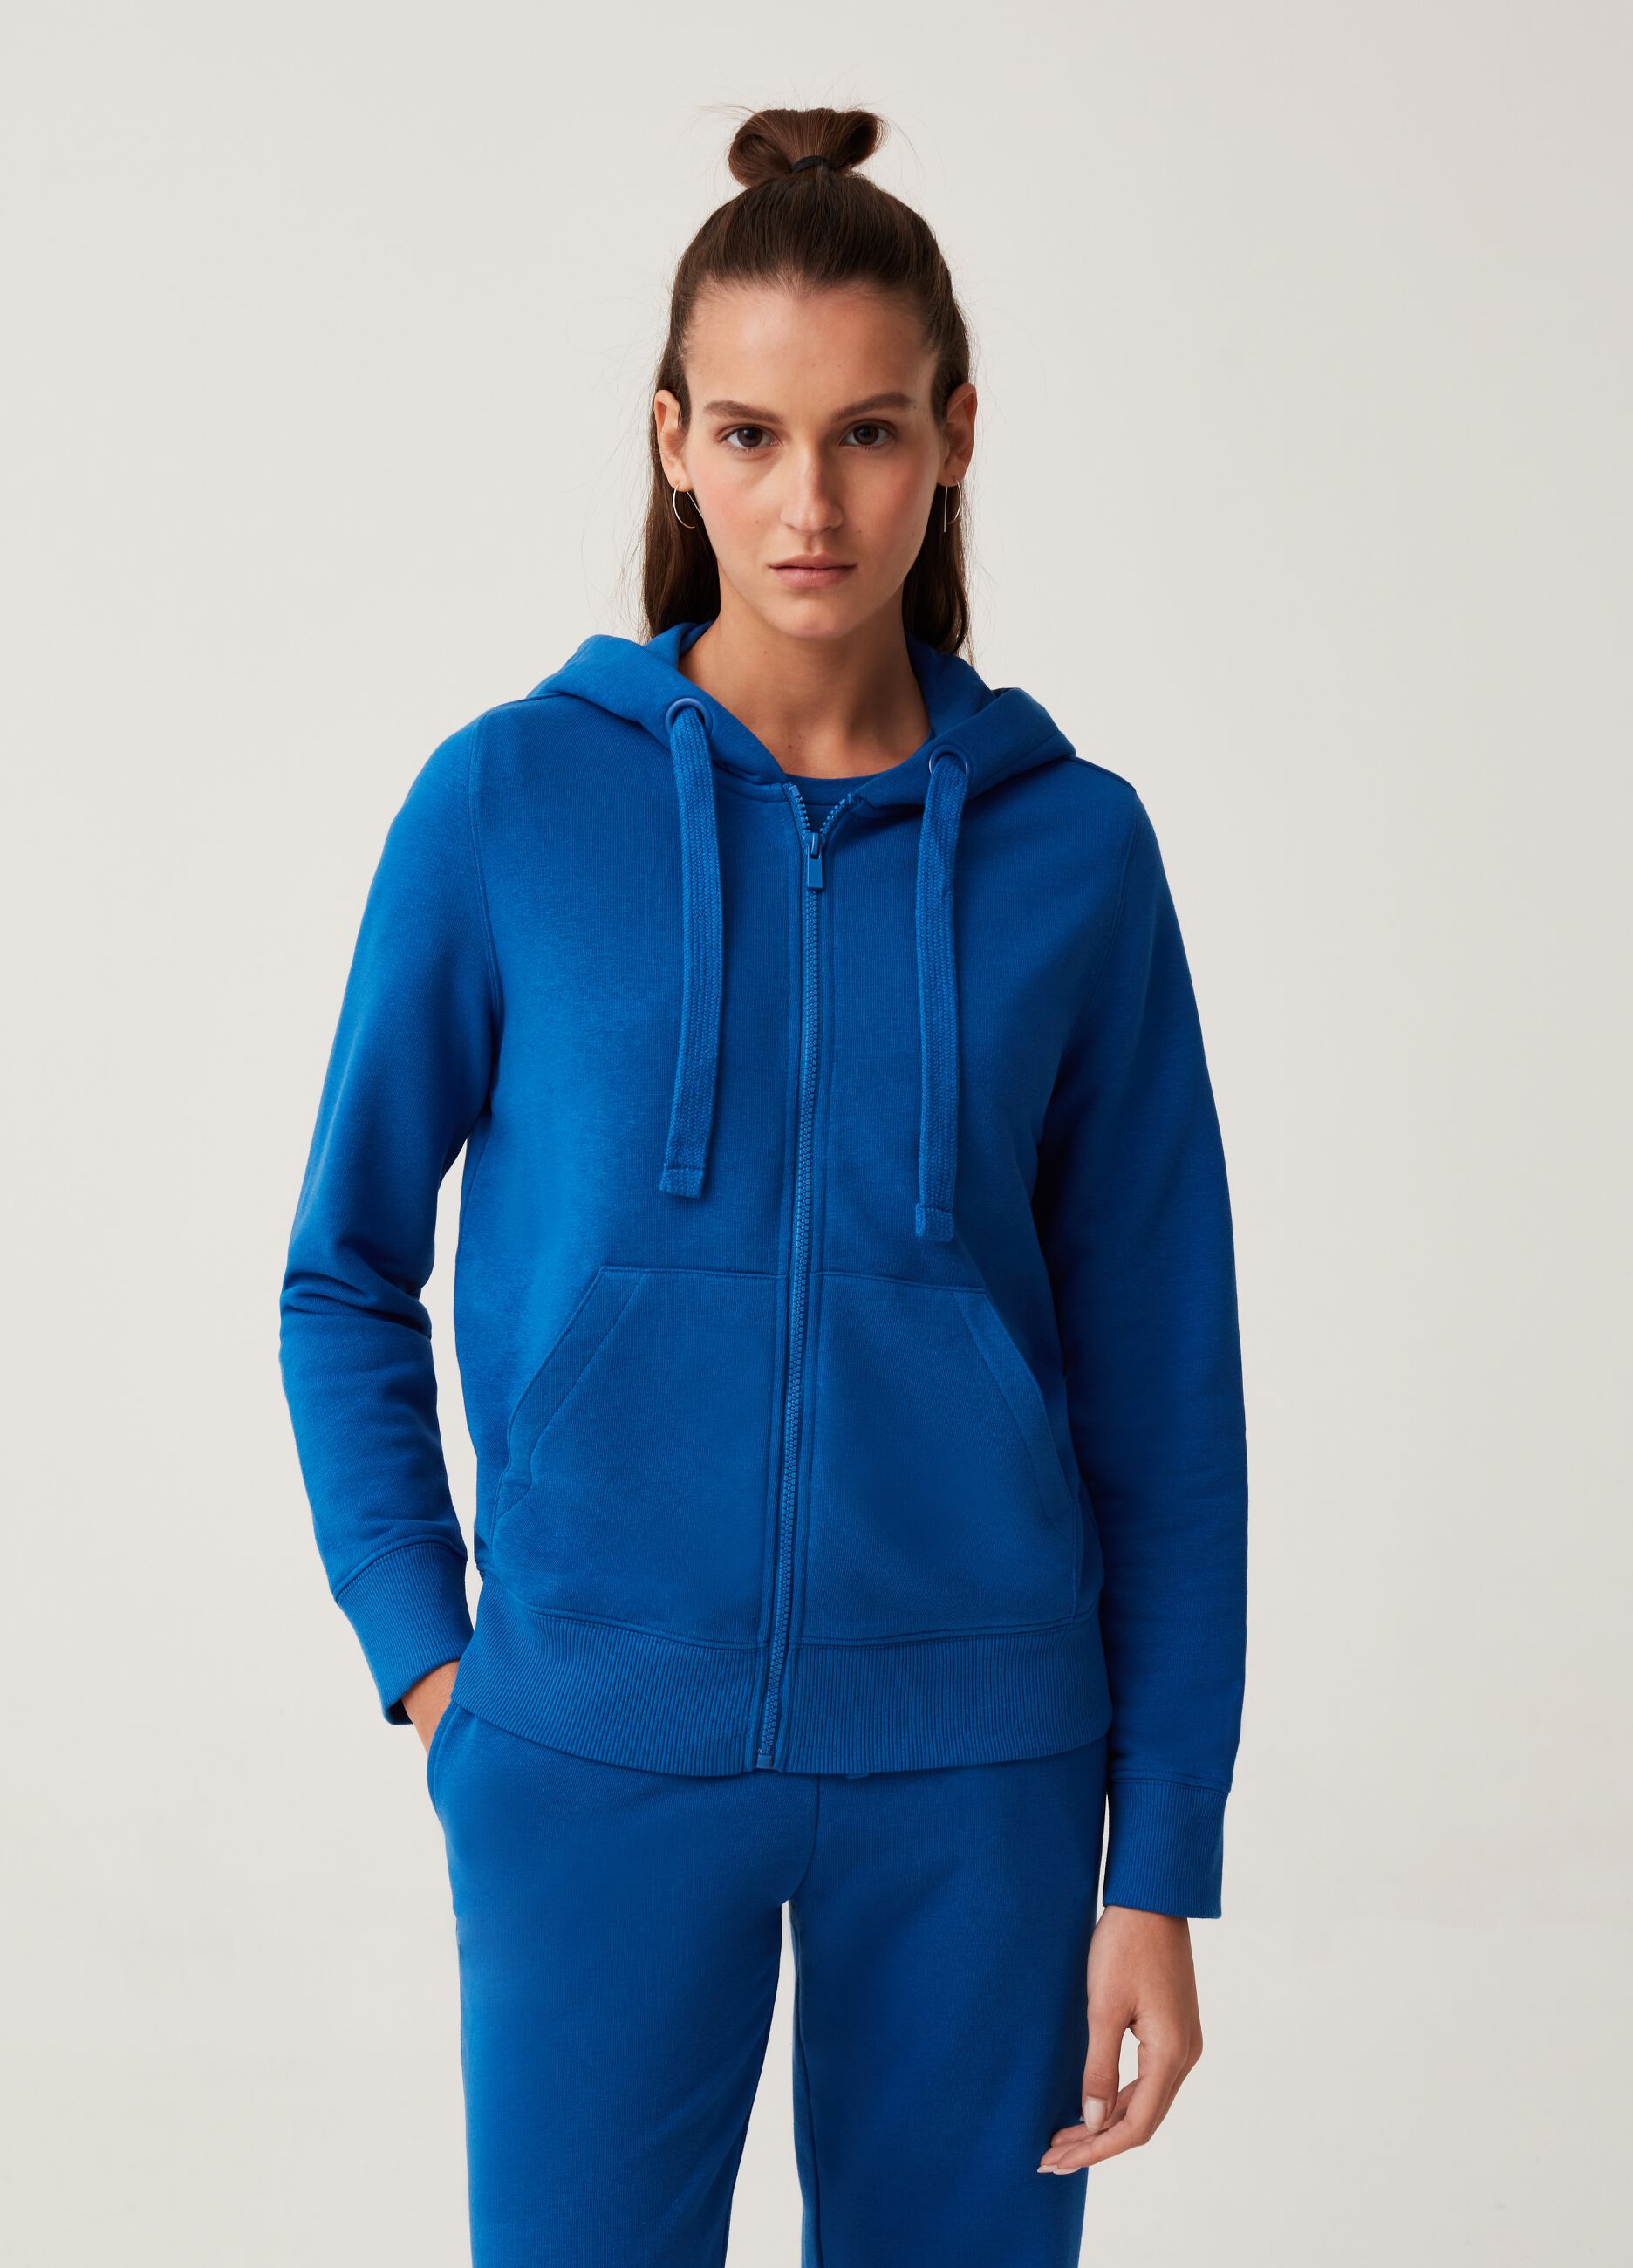 Woman's Cornflower Blue Fitness full-zip fleece sweatshirt with